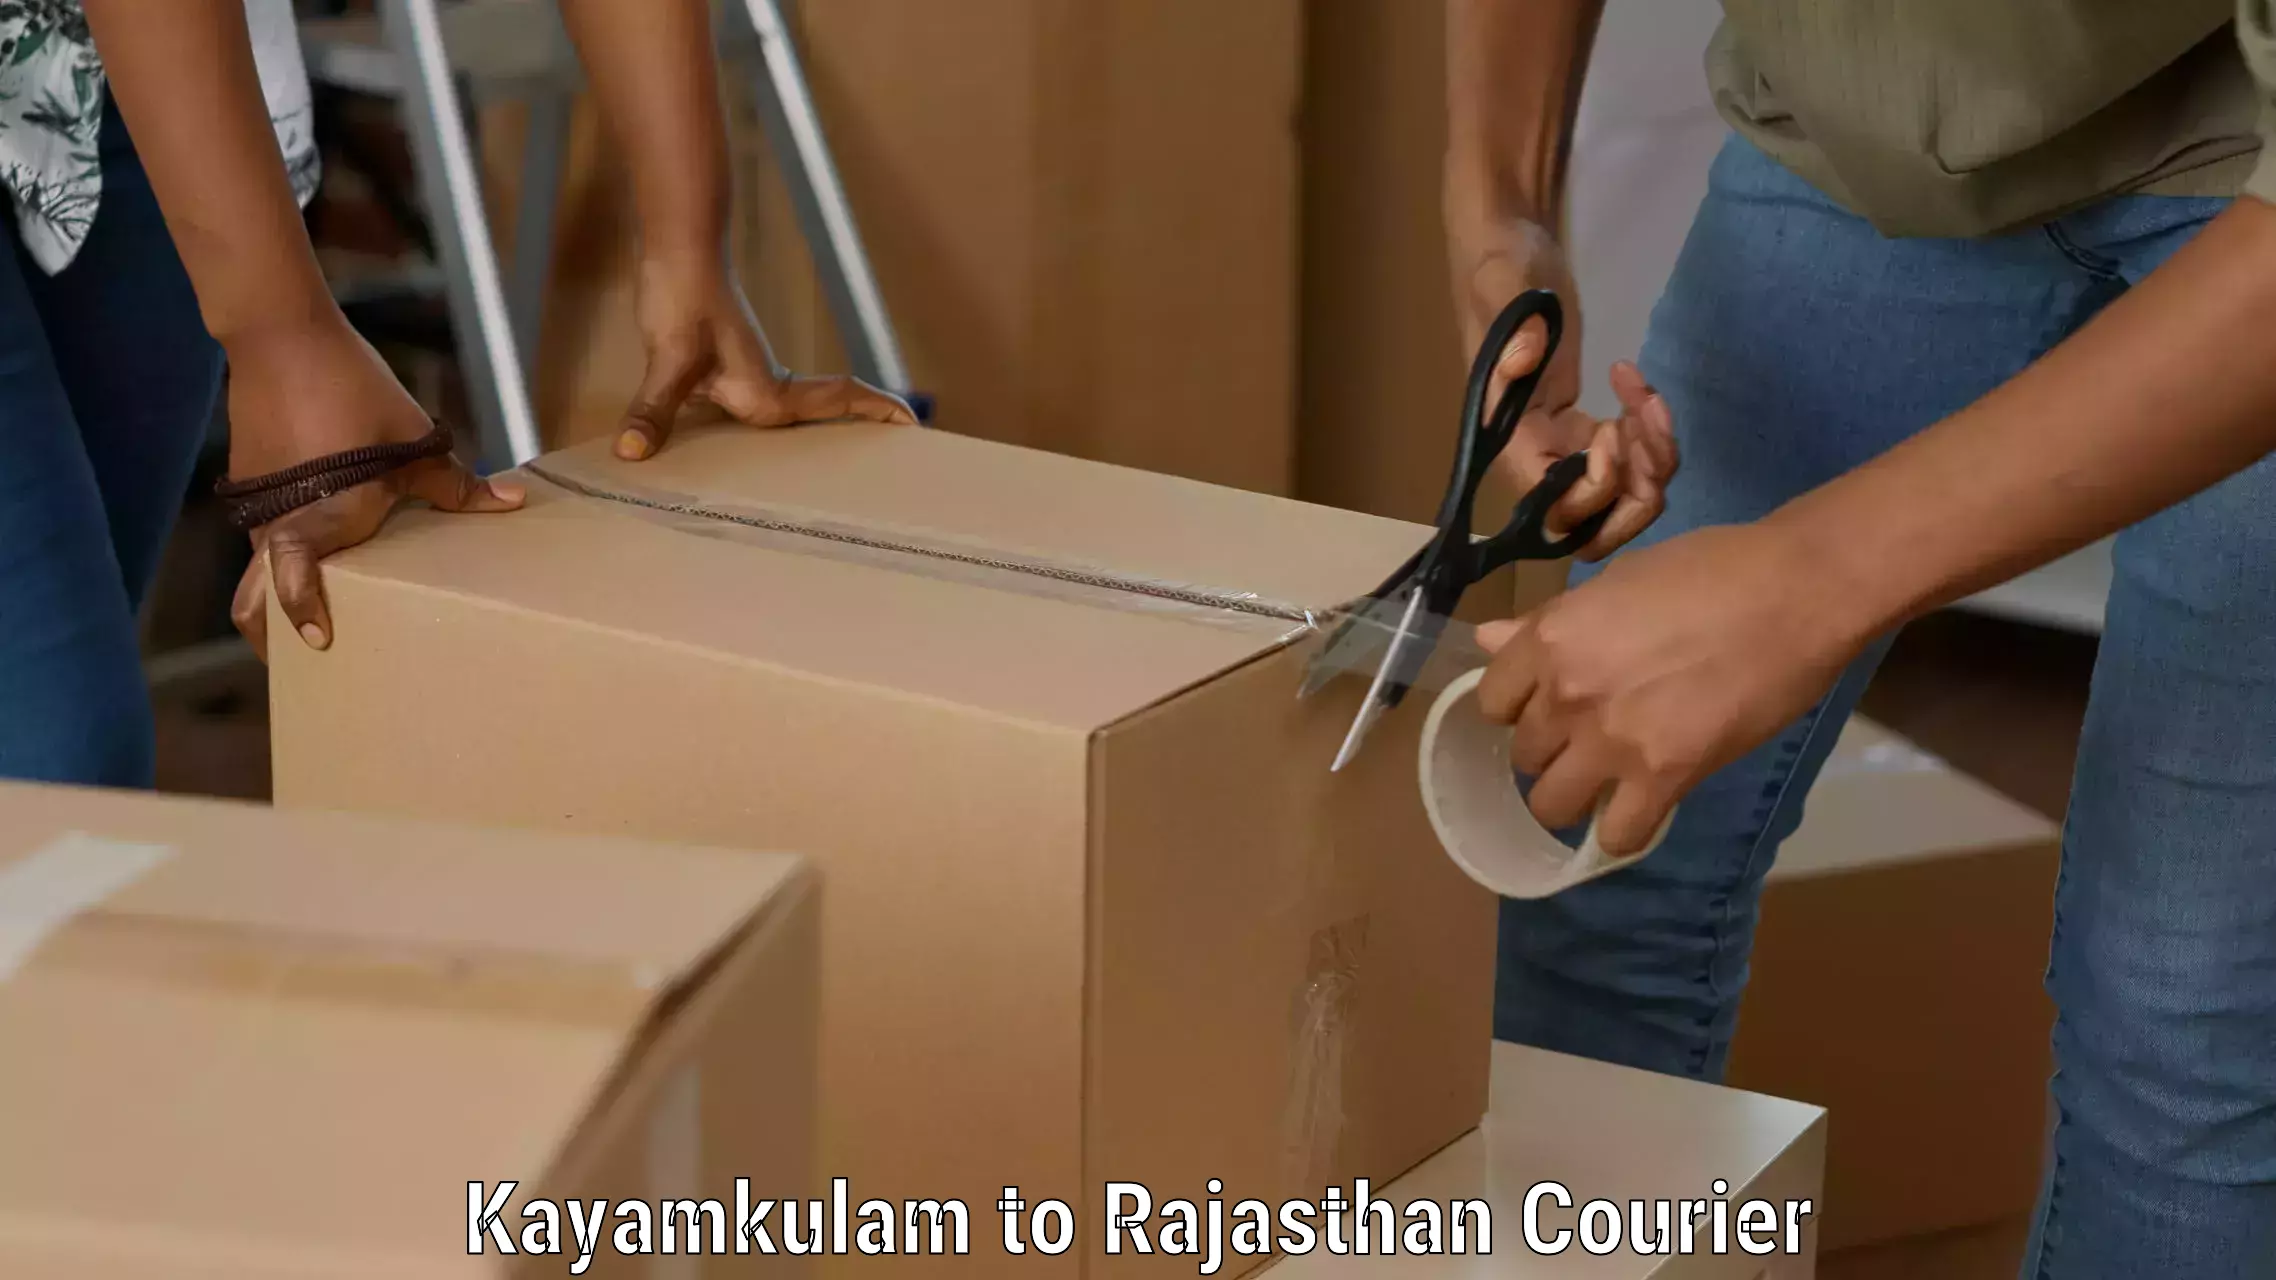 Affordable parcel service Kayamkulam to Tonk